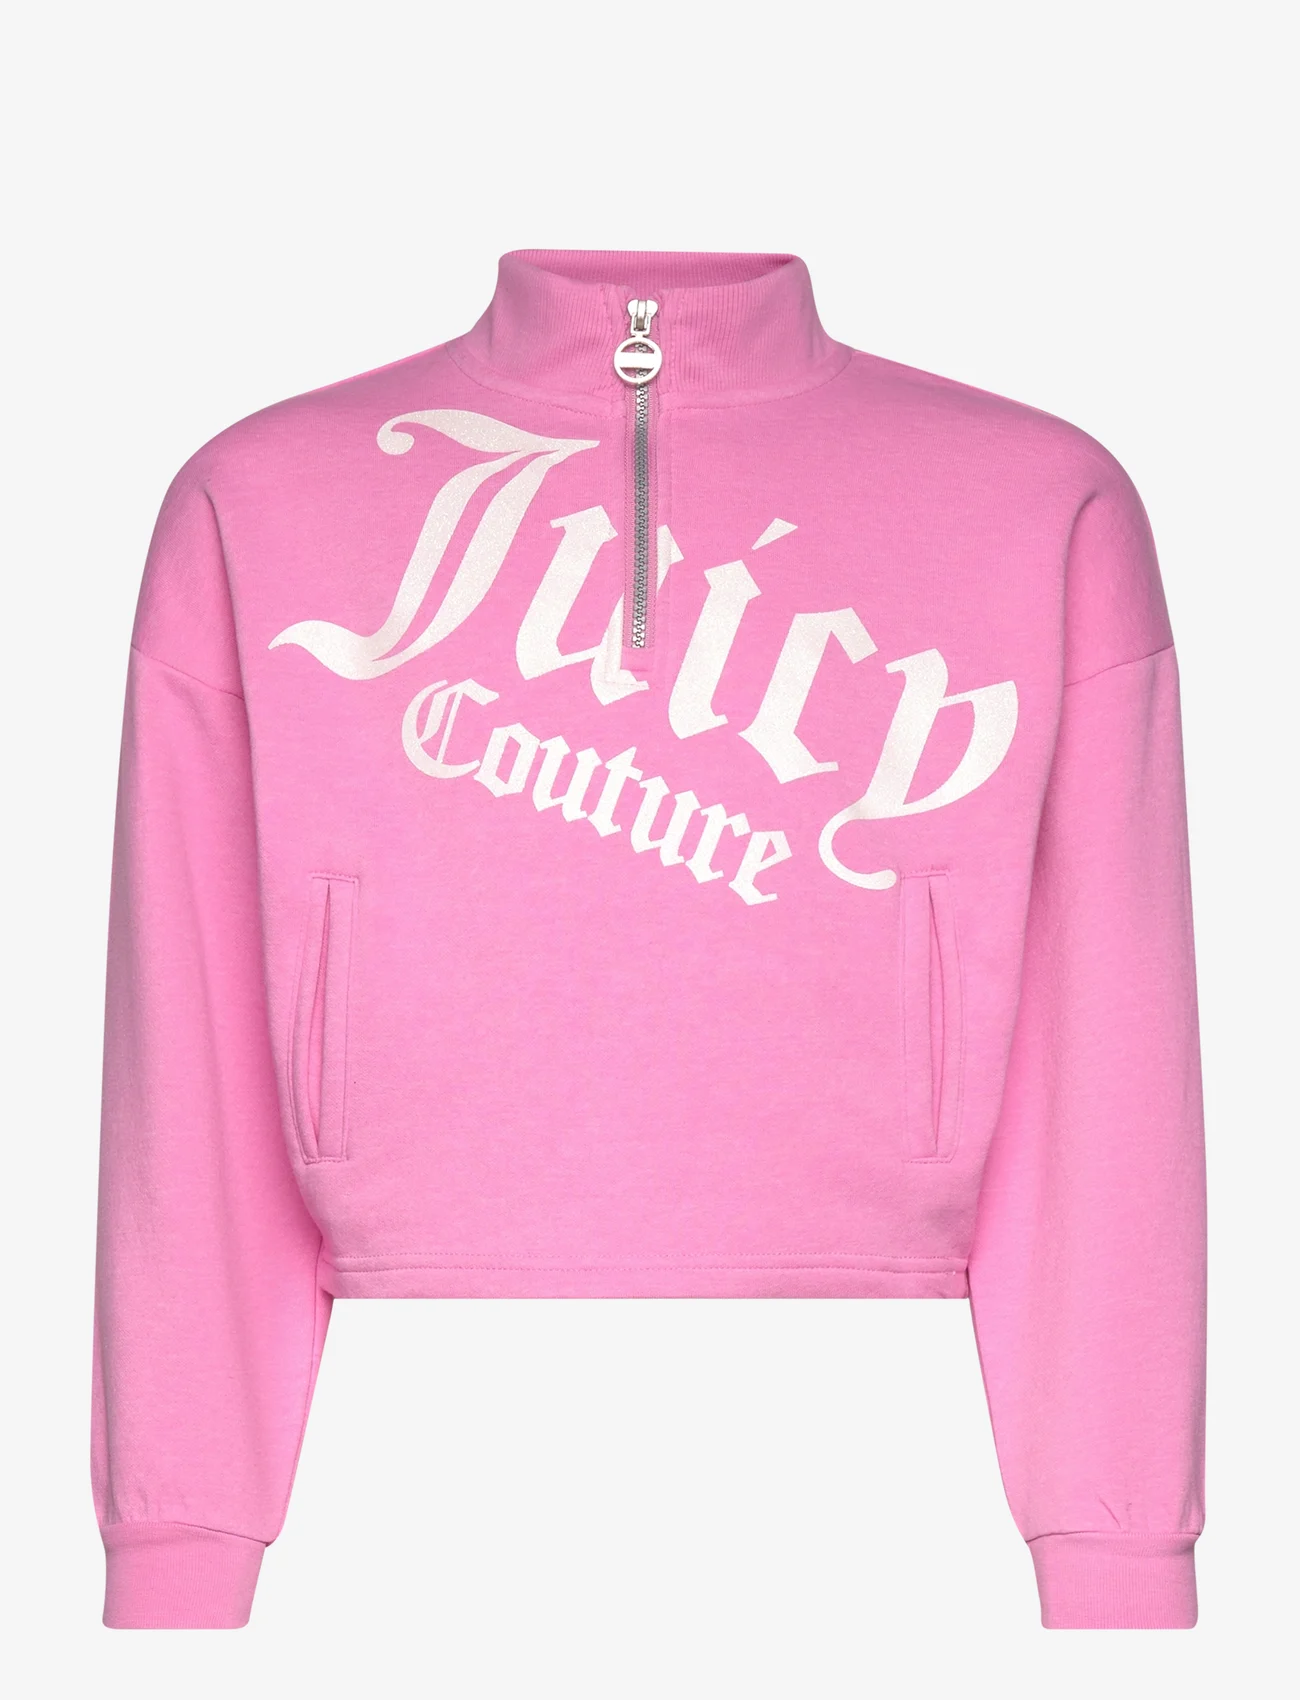 Juicy Couture - Juicy Quilted Panel Quarter Zip - sweatshirts - fuchsia pink - 0